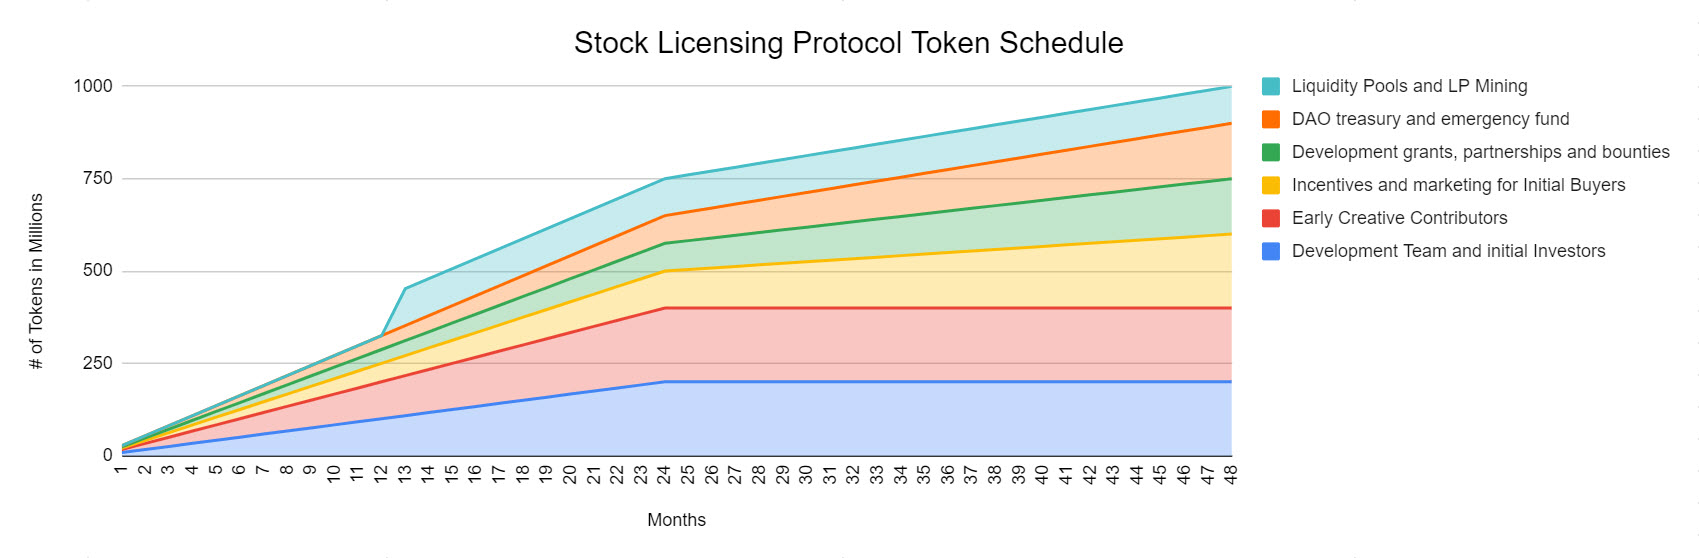 Stock Licensing Protocol Token Schedule